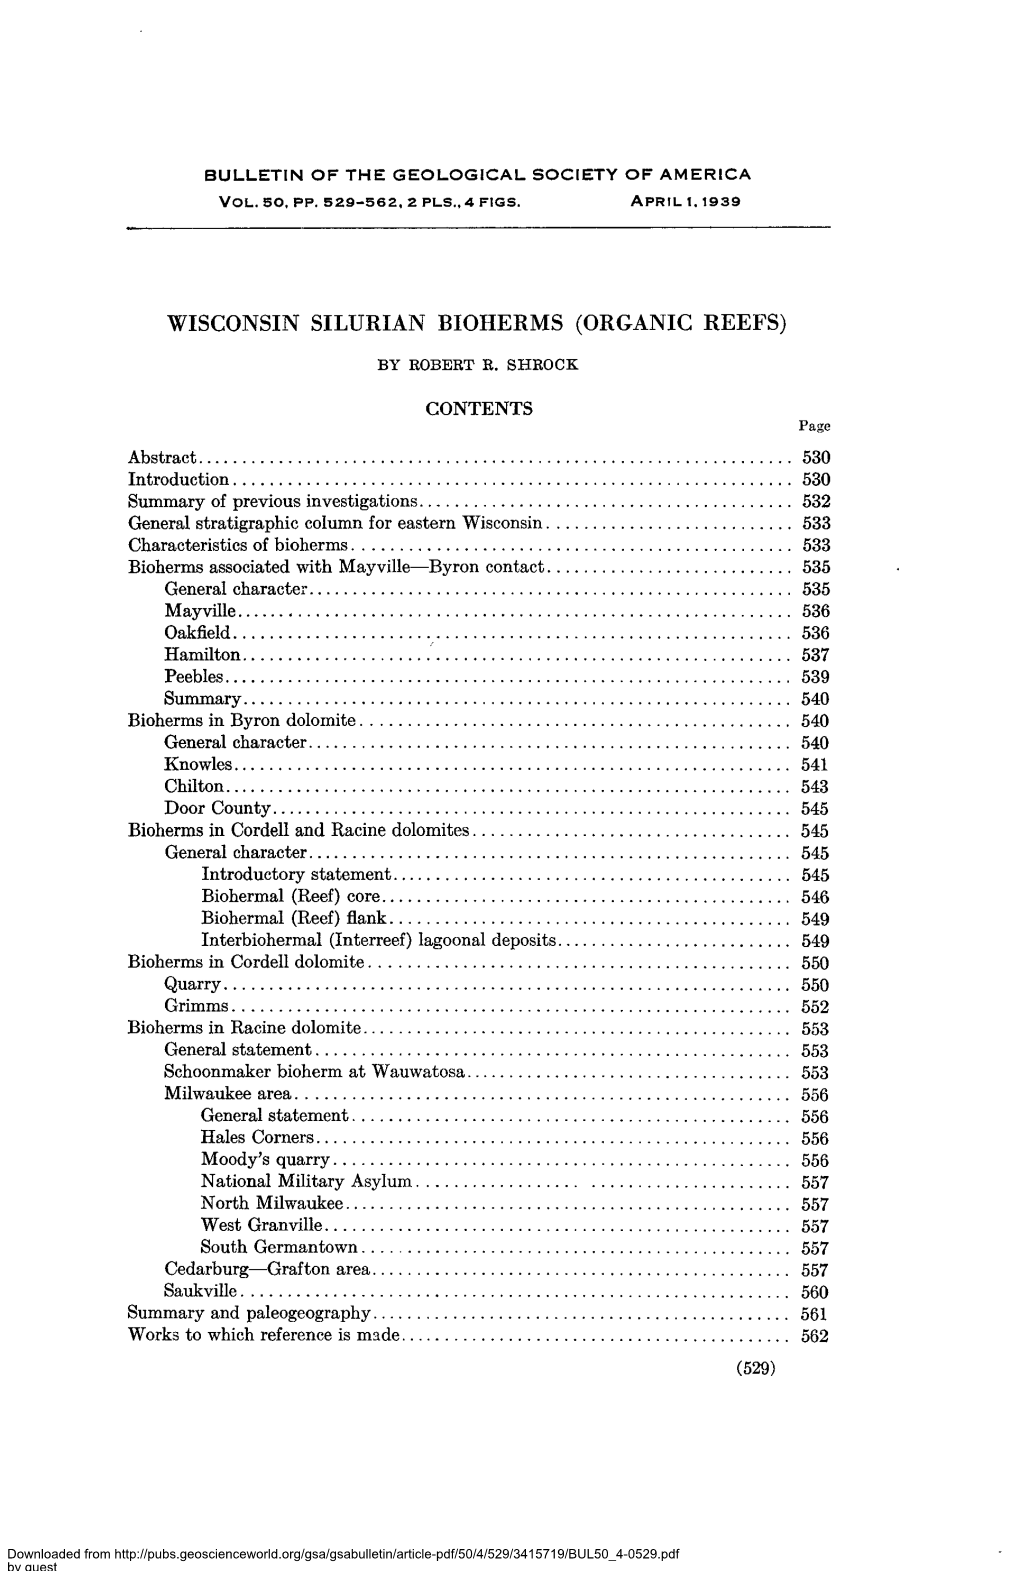 Wisconsin Silurian Bioherms (Organic Reefs) by Robert R